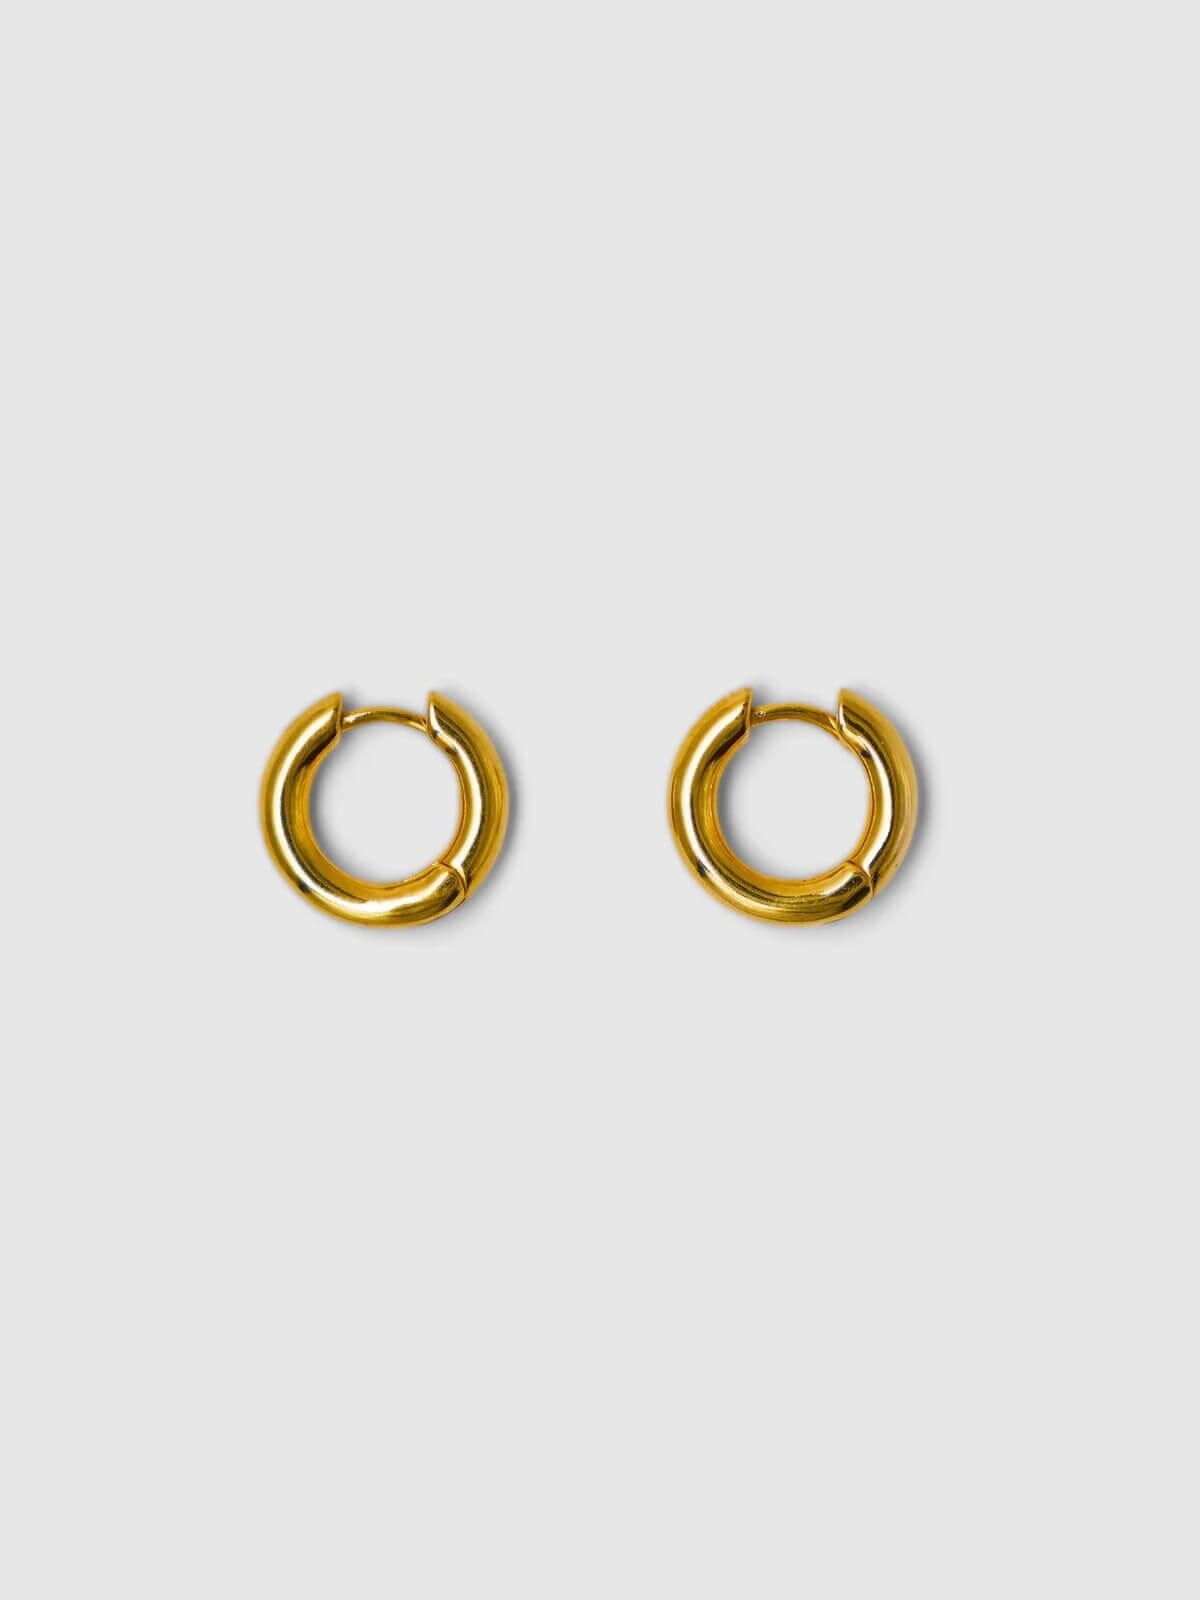 Brie Leon | Everyday Micro Earrings - Gold | Perlu